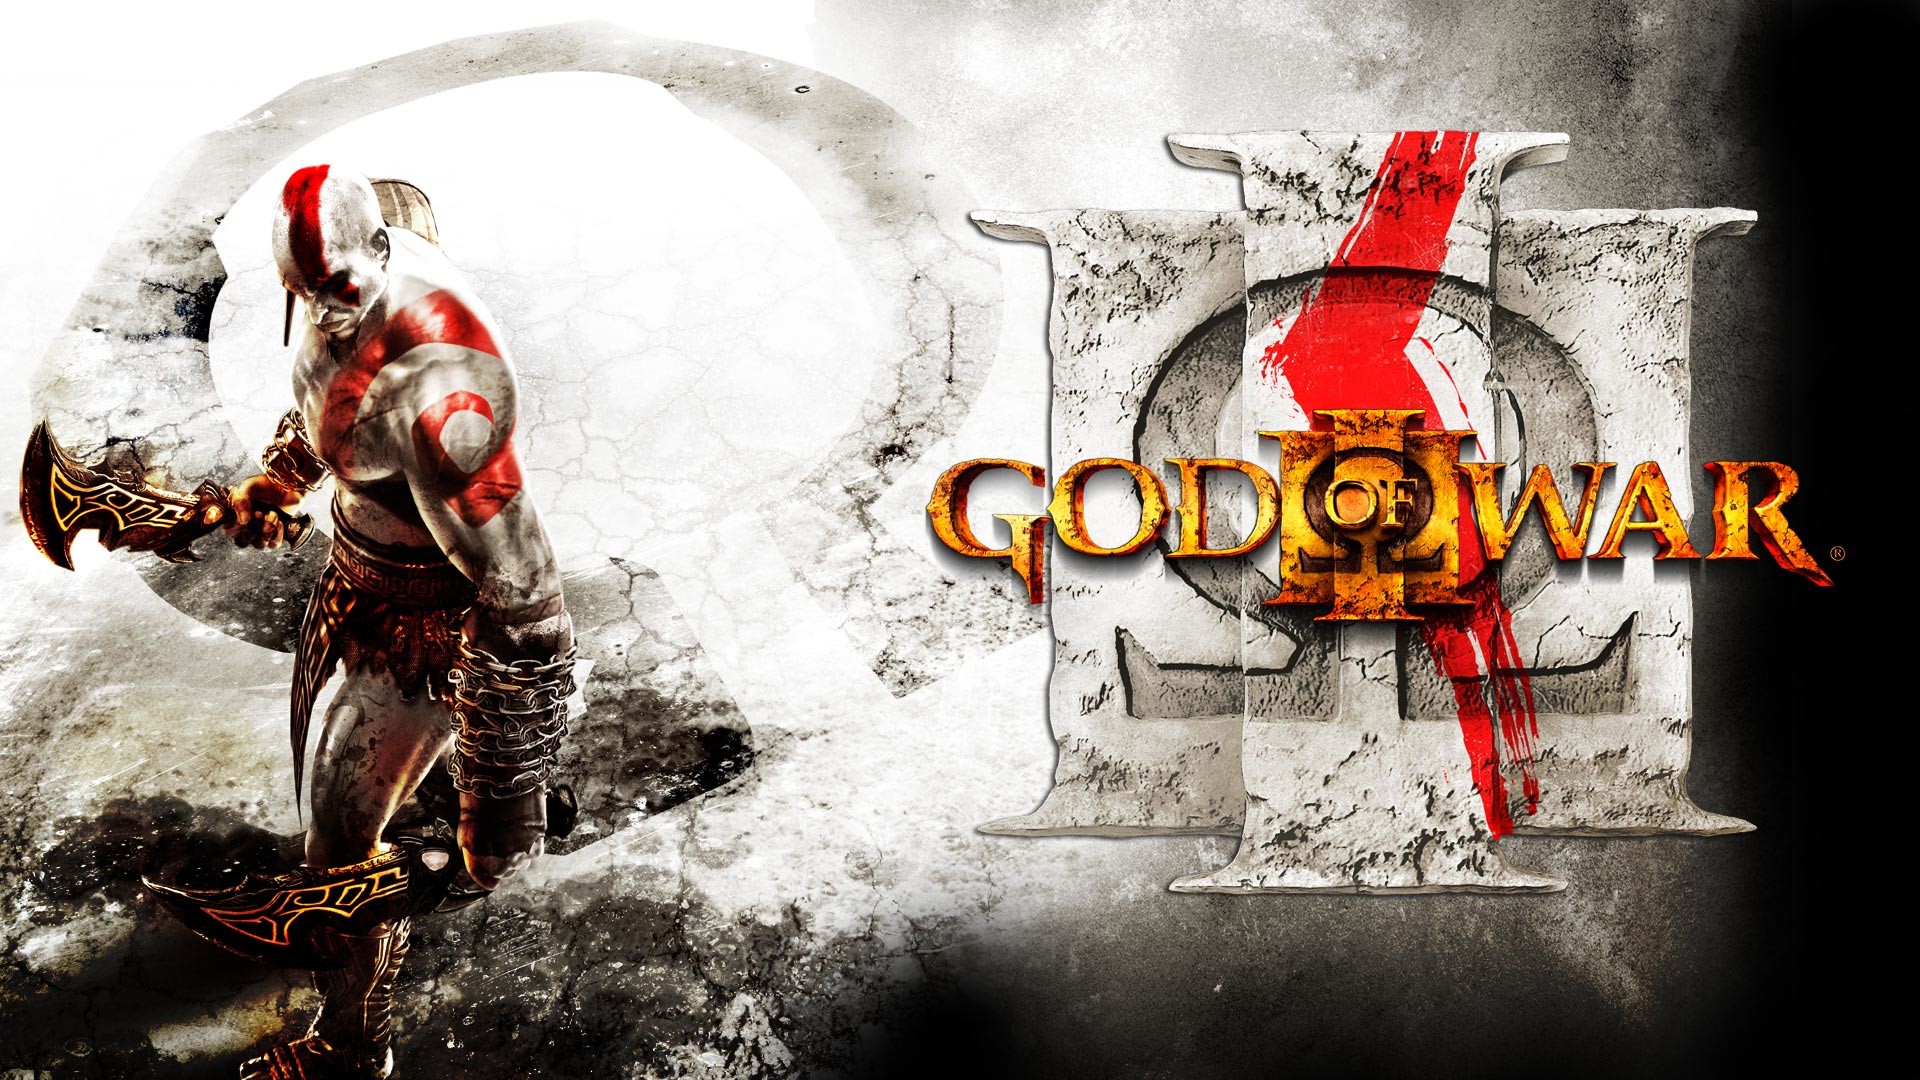 Fighting Kratos in God of War wallpaper Game wallpapers